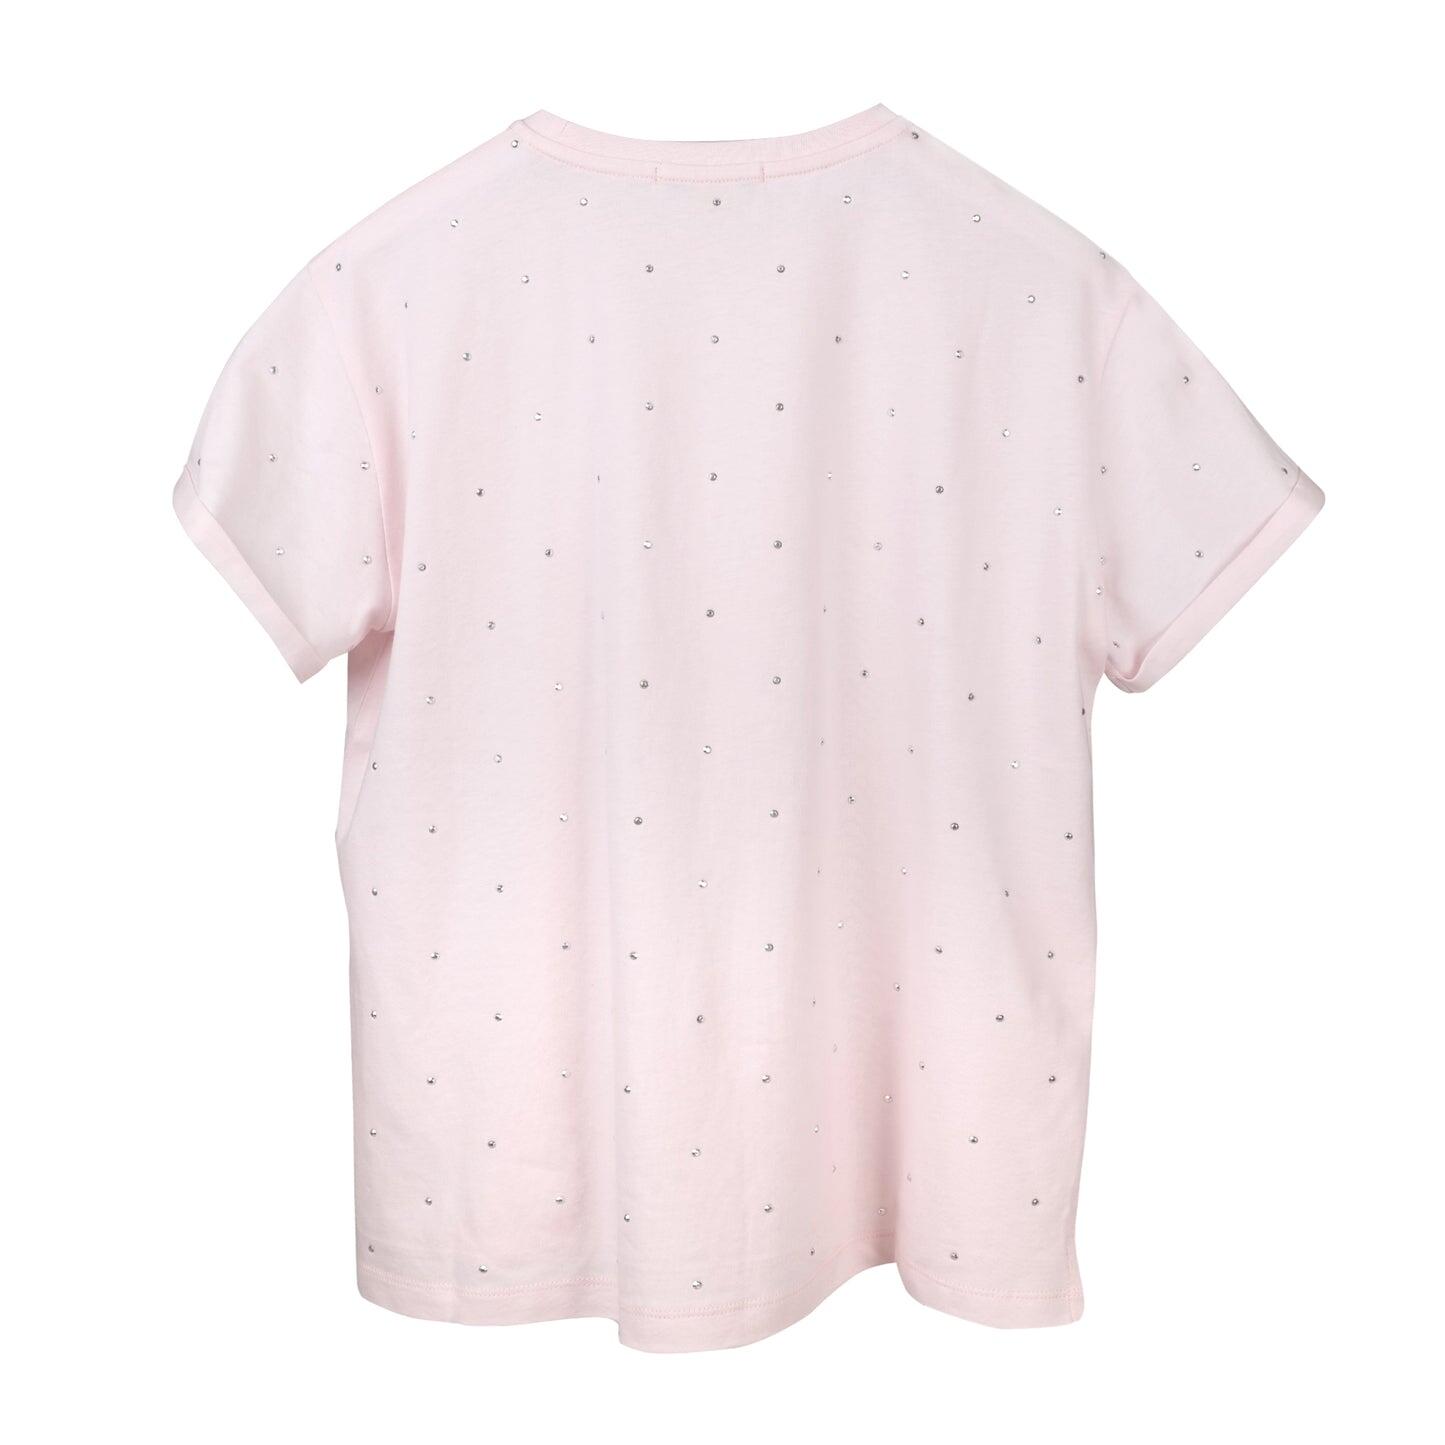 Girls Pink T-Shirt With Gems